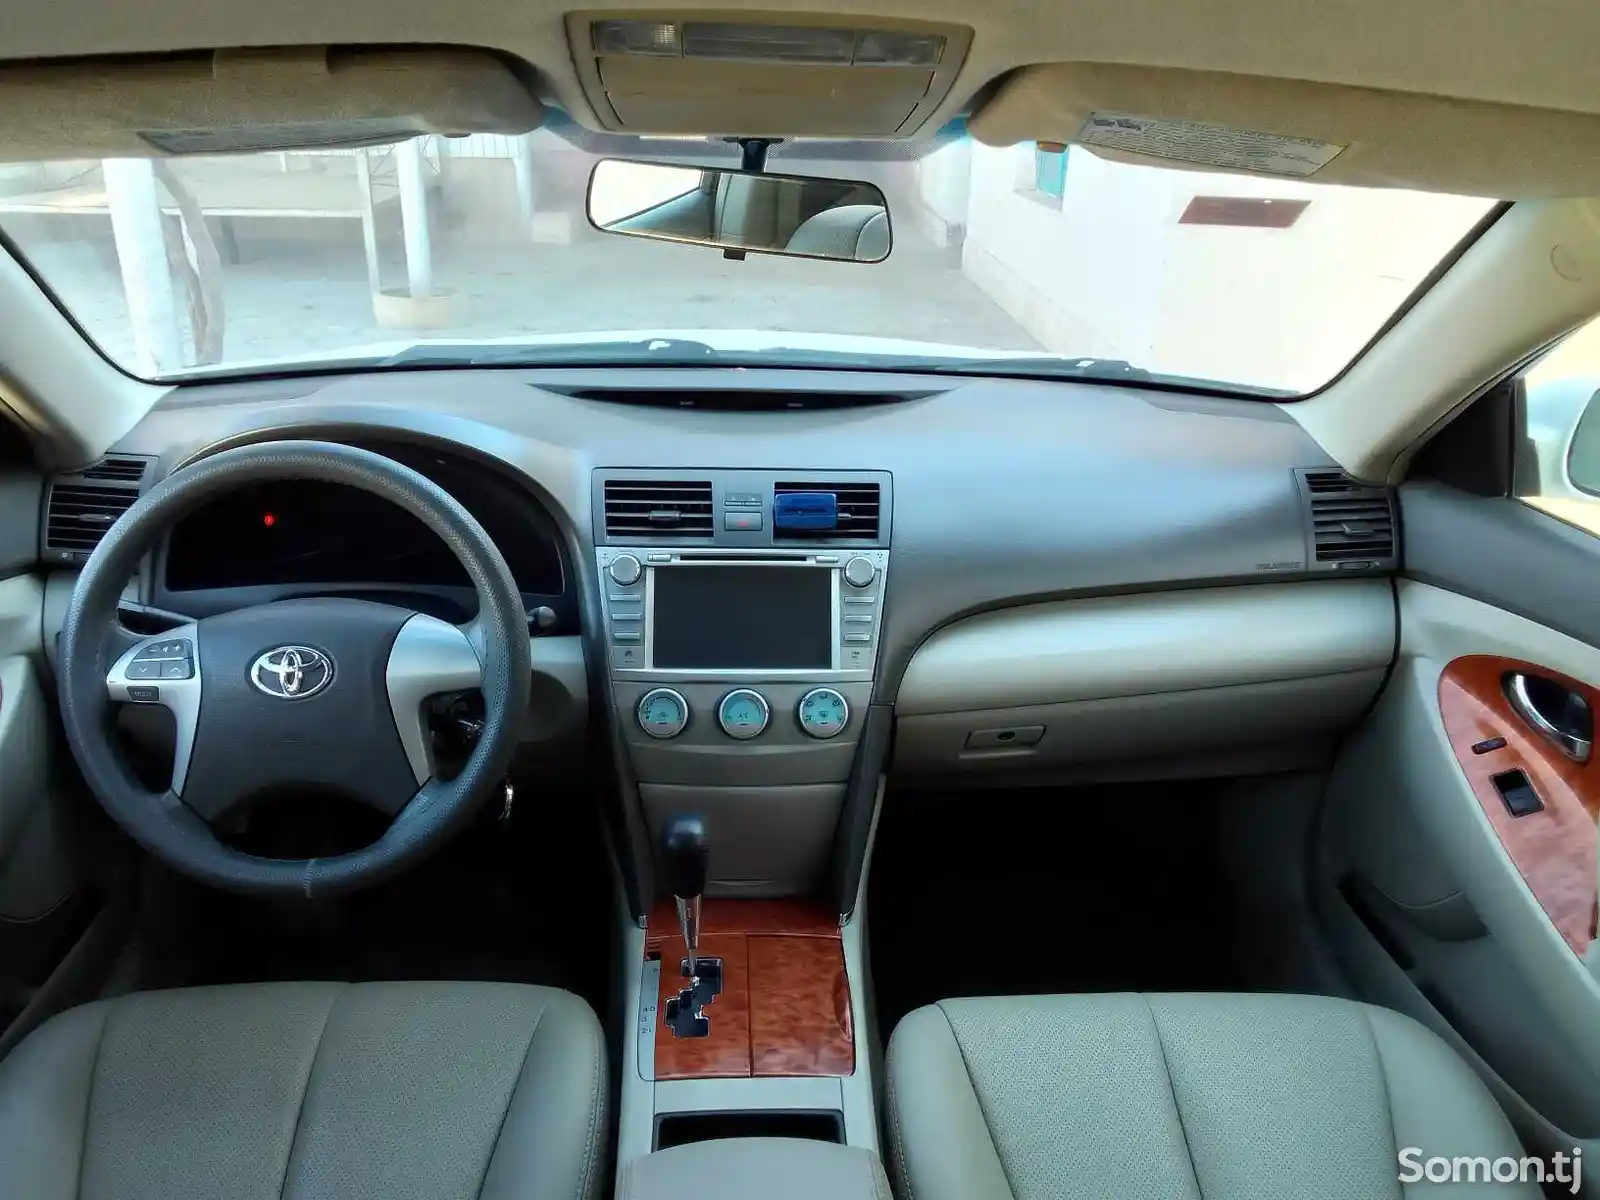 Toyota Camry, 2009-2